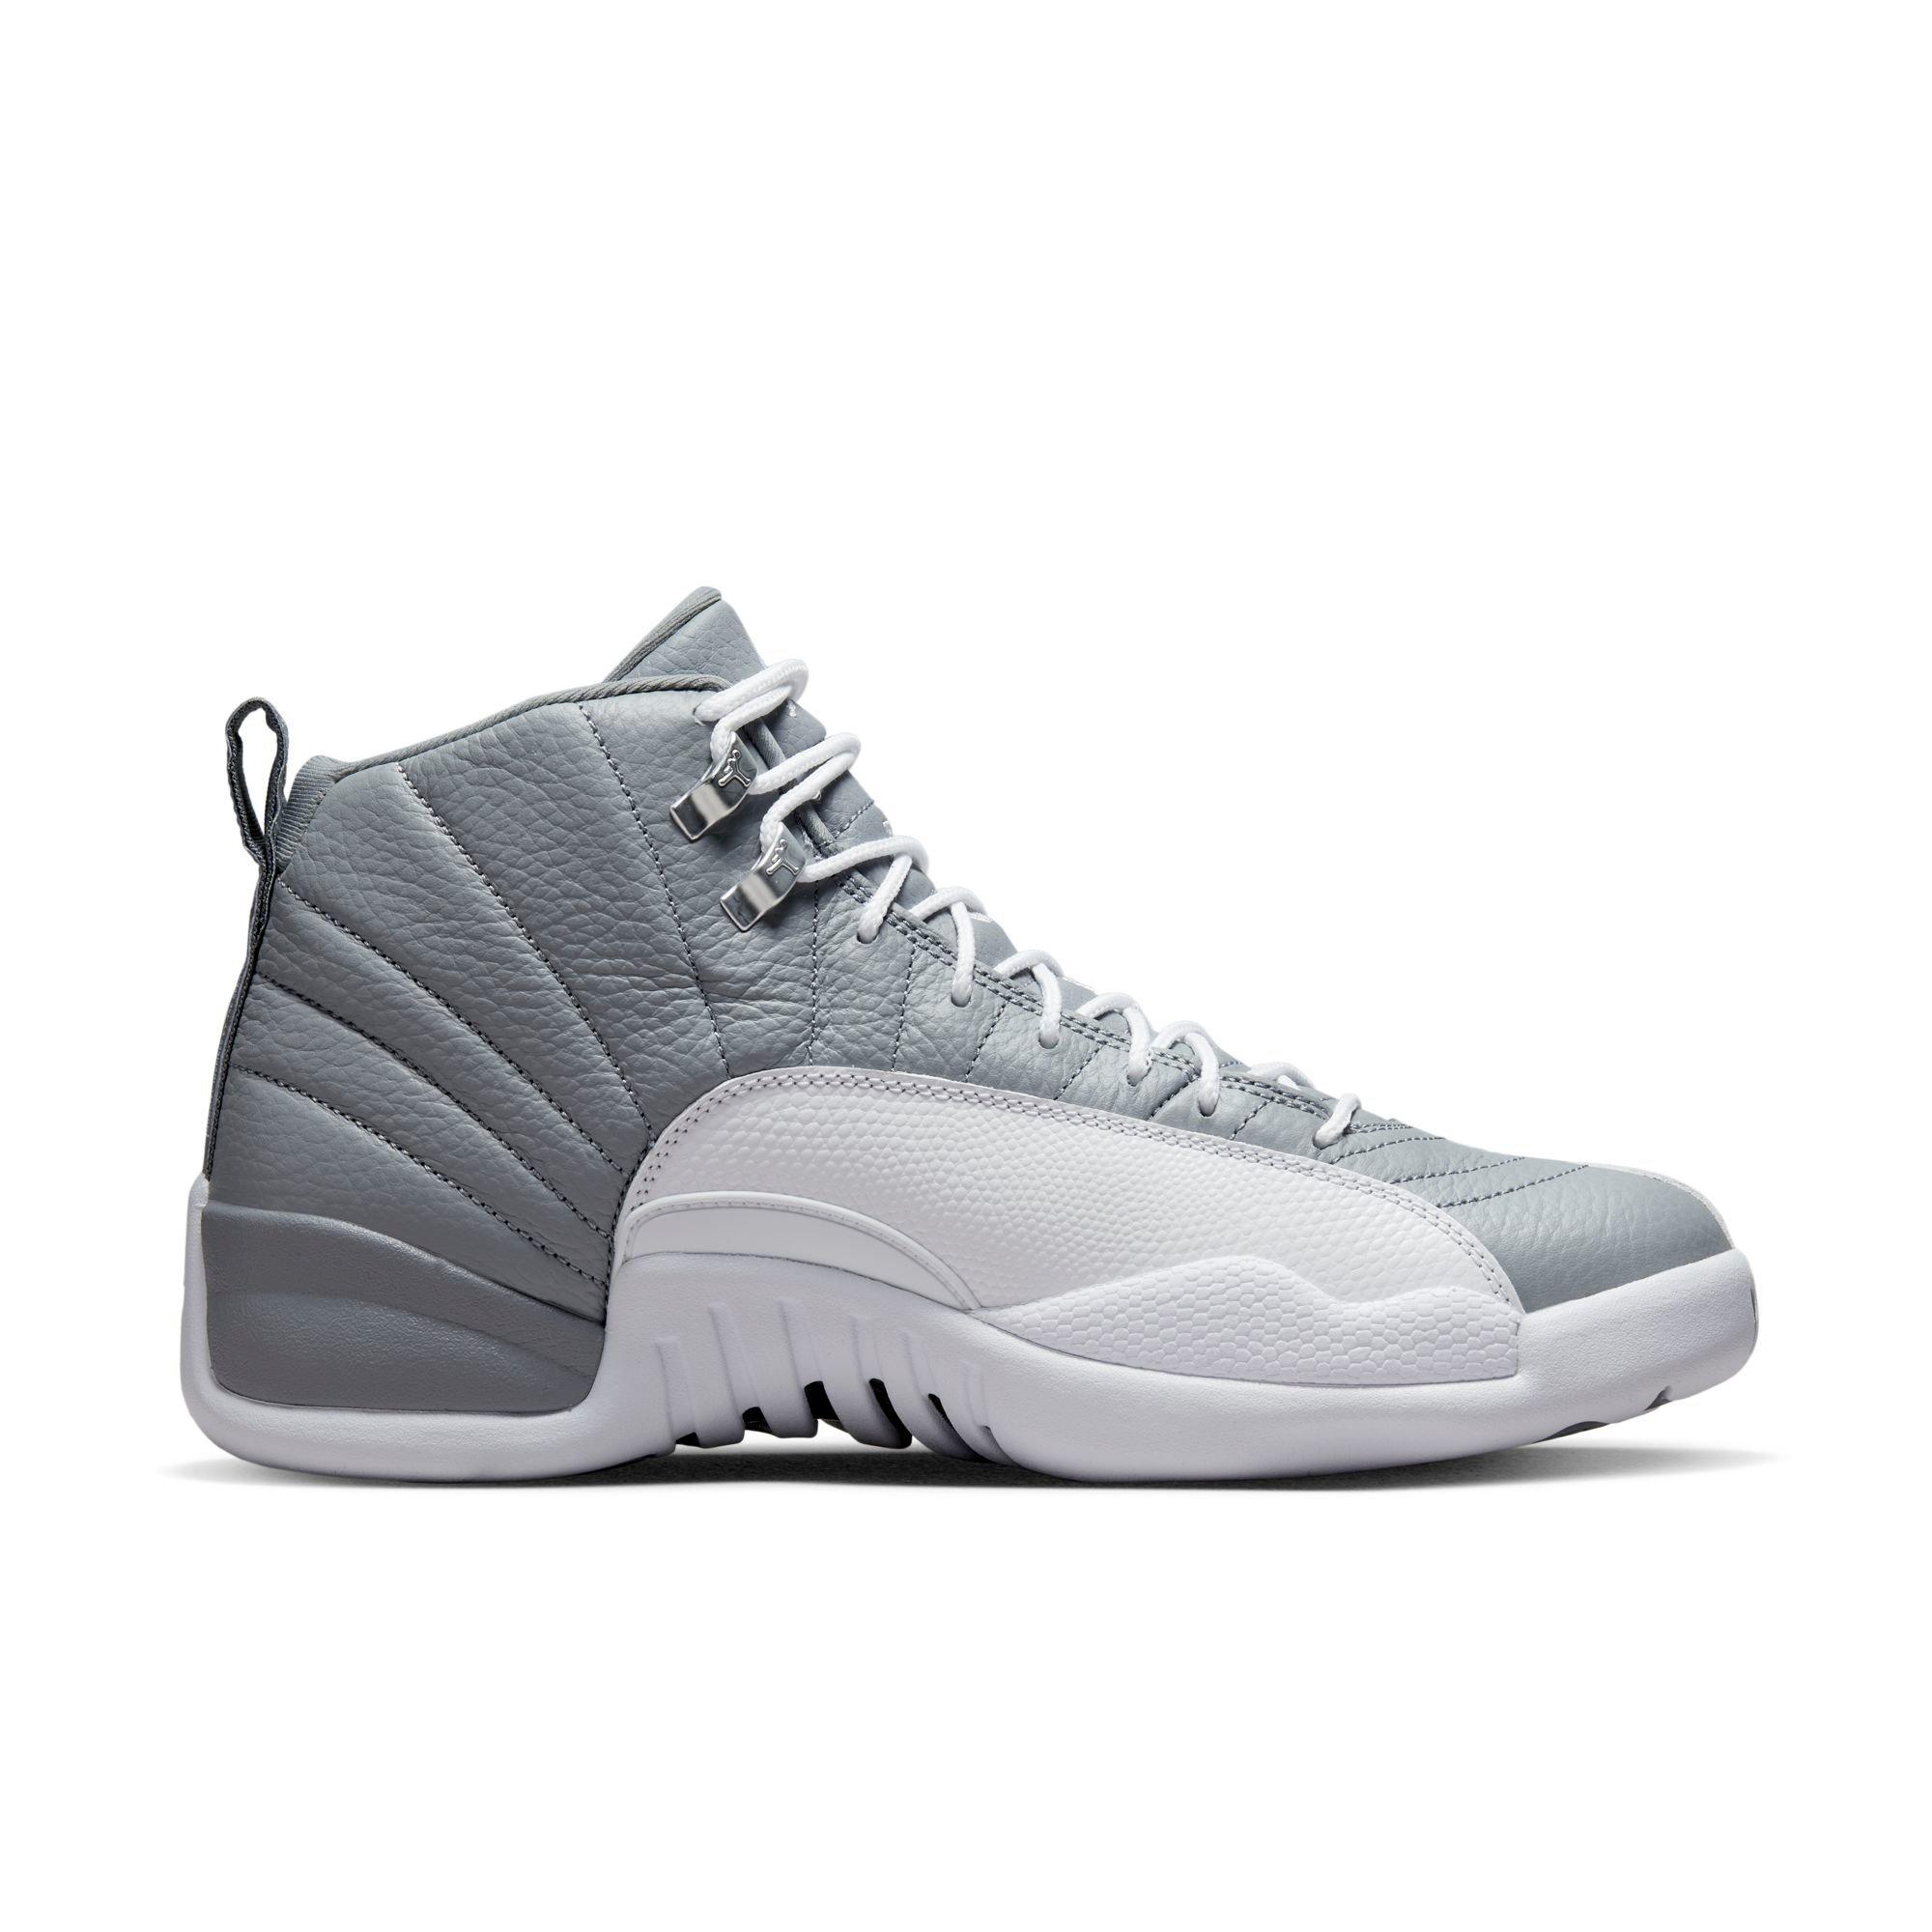 grey and white jordan 12s